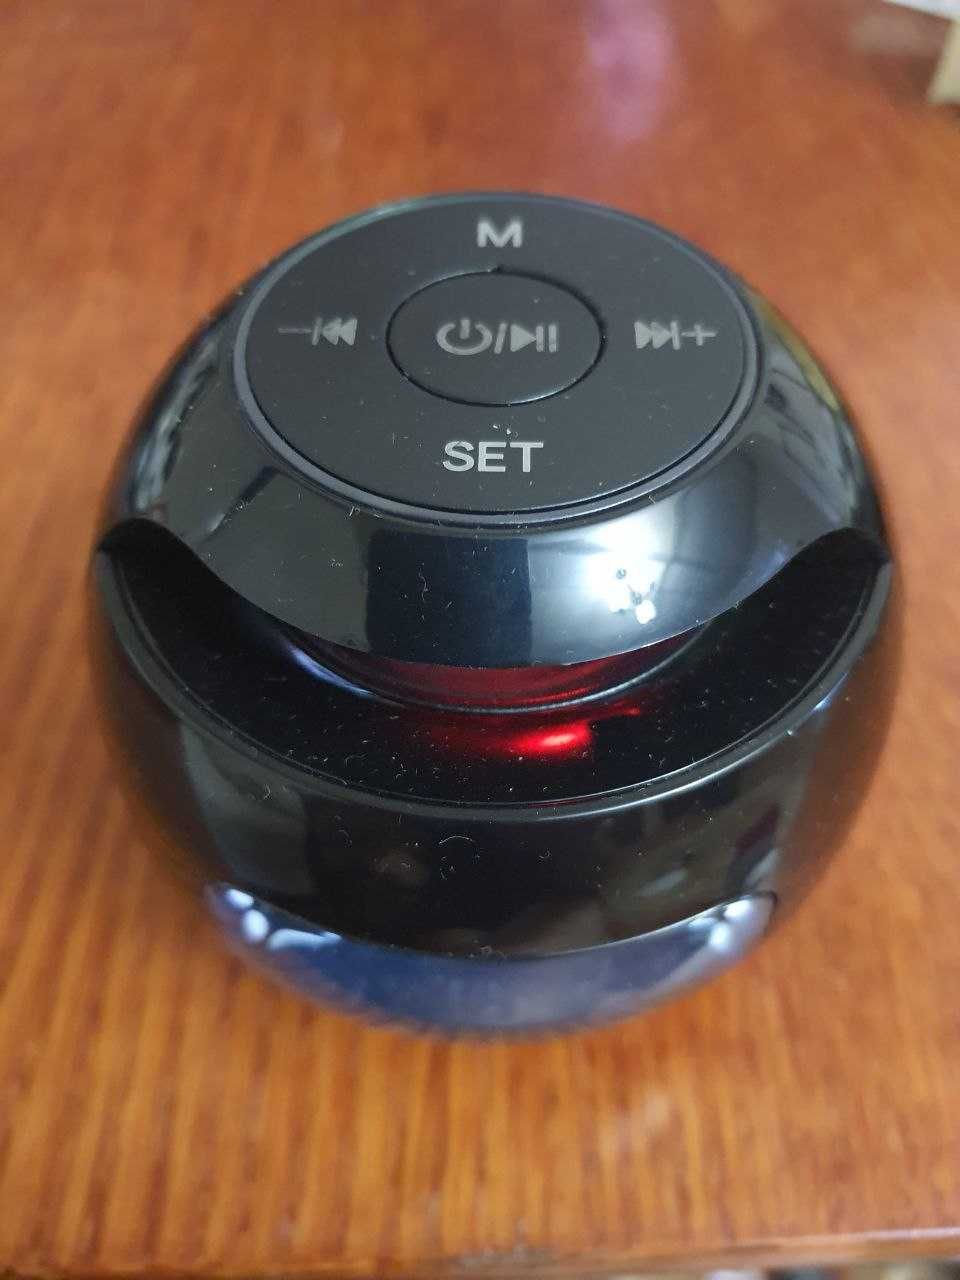 Портативна Bluetooth-колонка з годинником KIMISO KMS-K12 Чорна